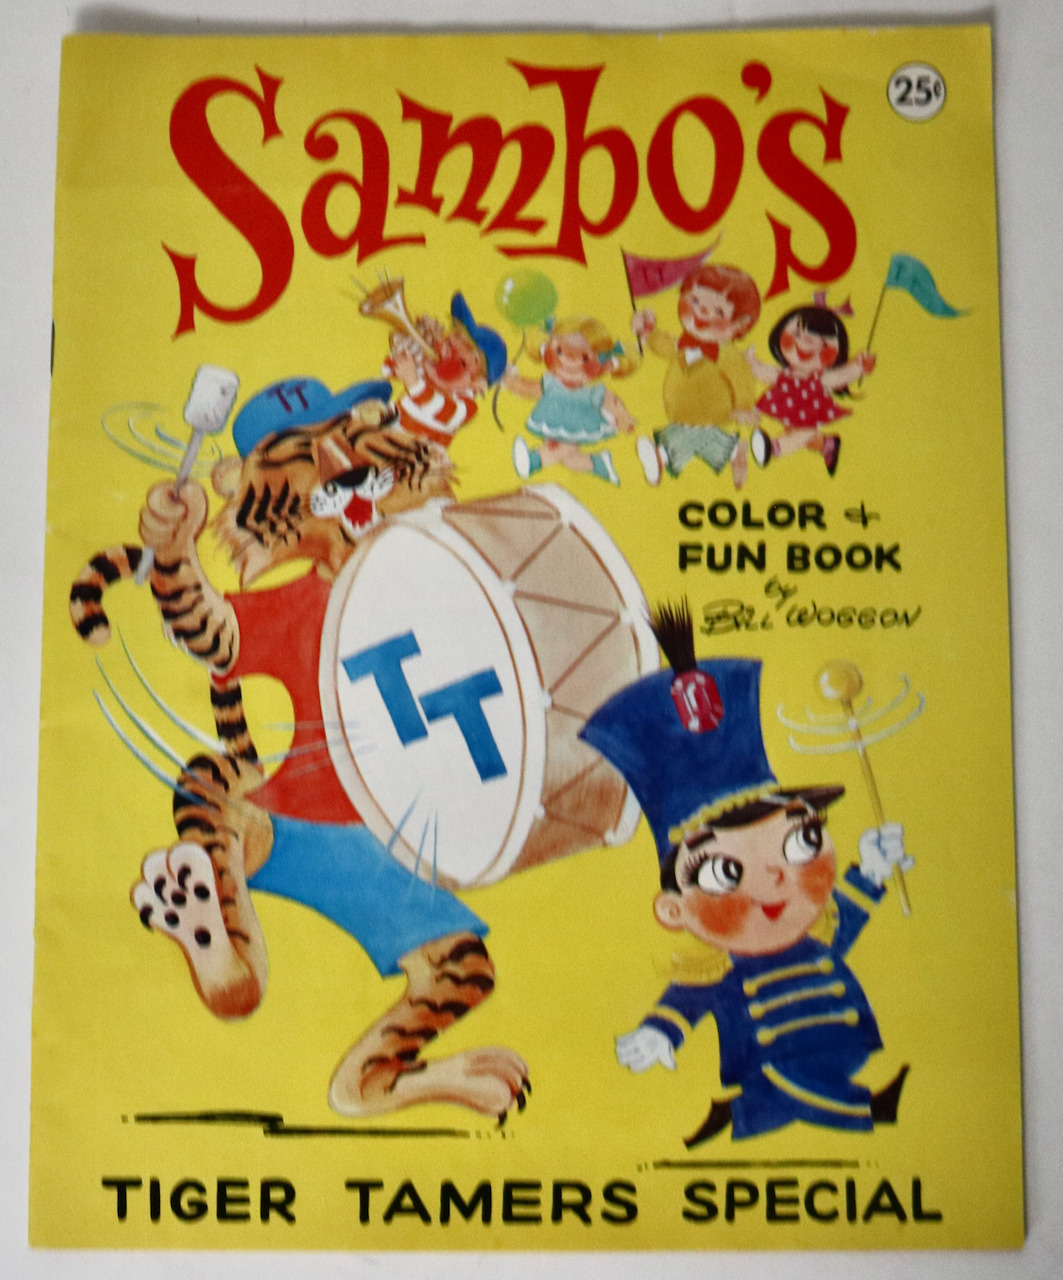 SAMBO'S vintage color fun book by Bill Woggon restaurant advertising